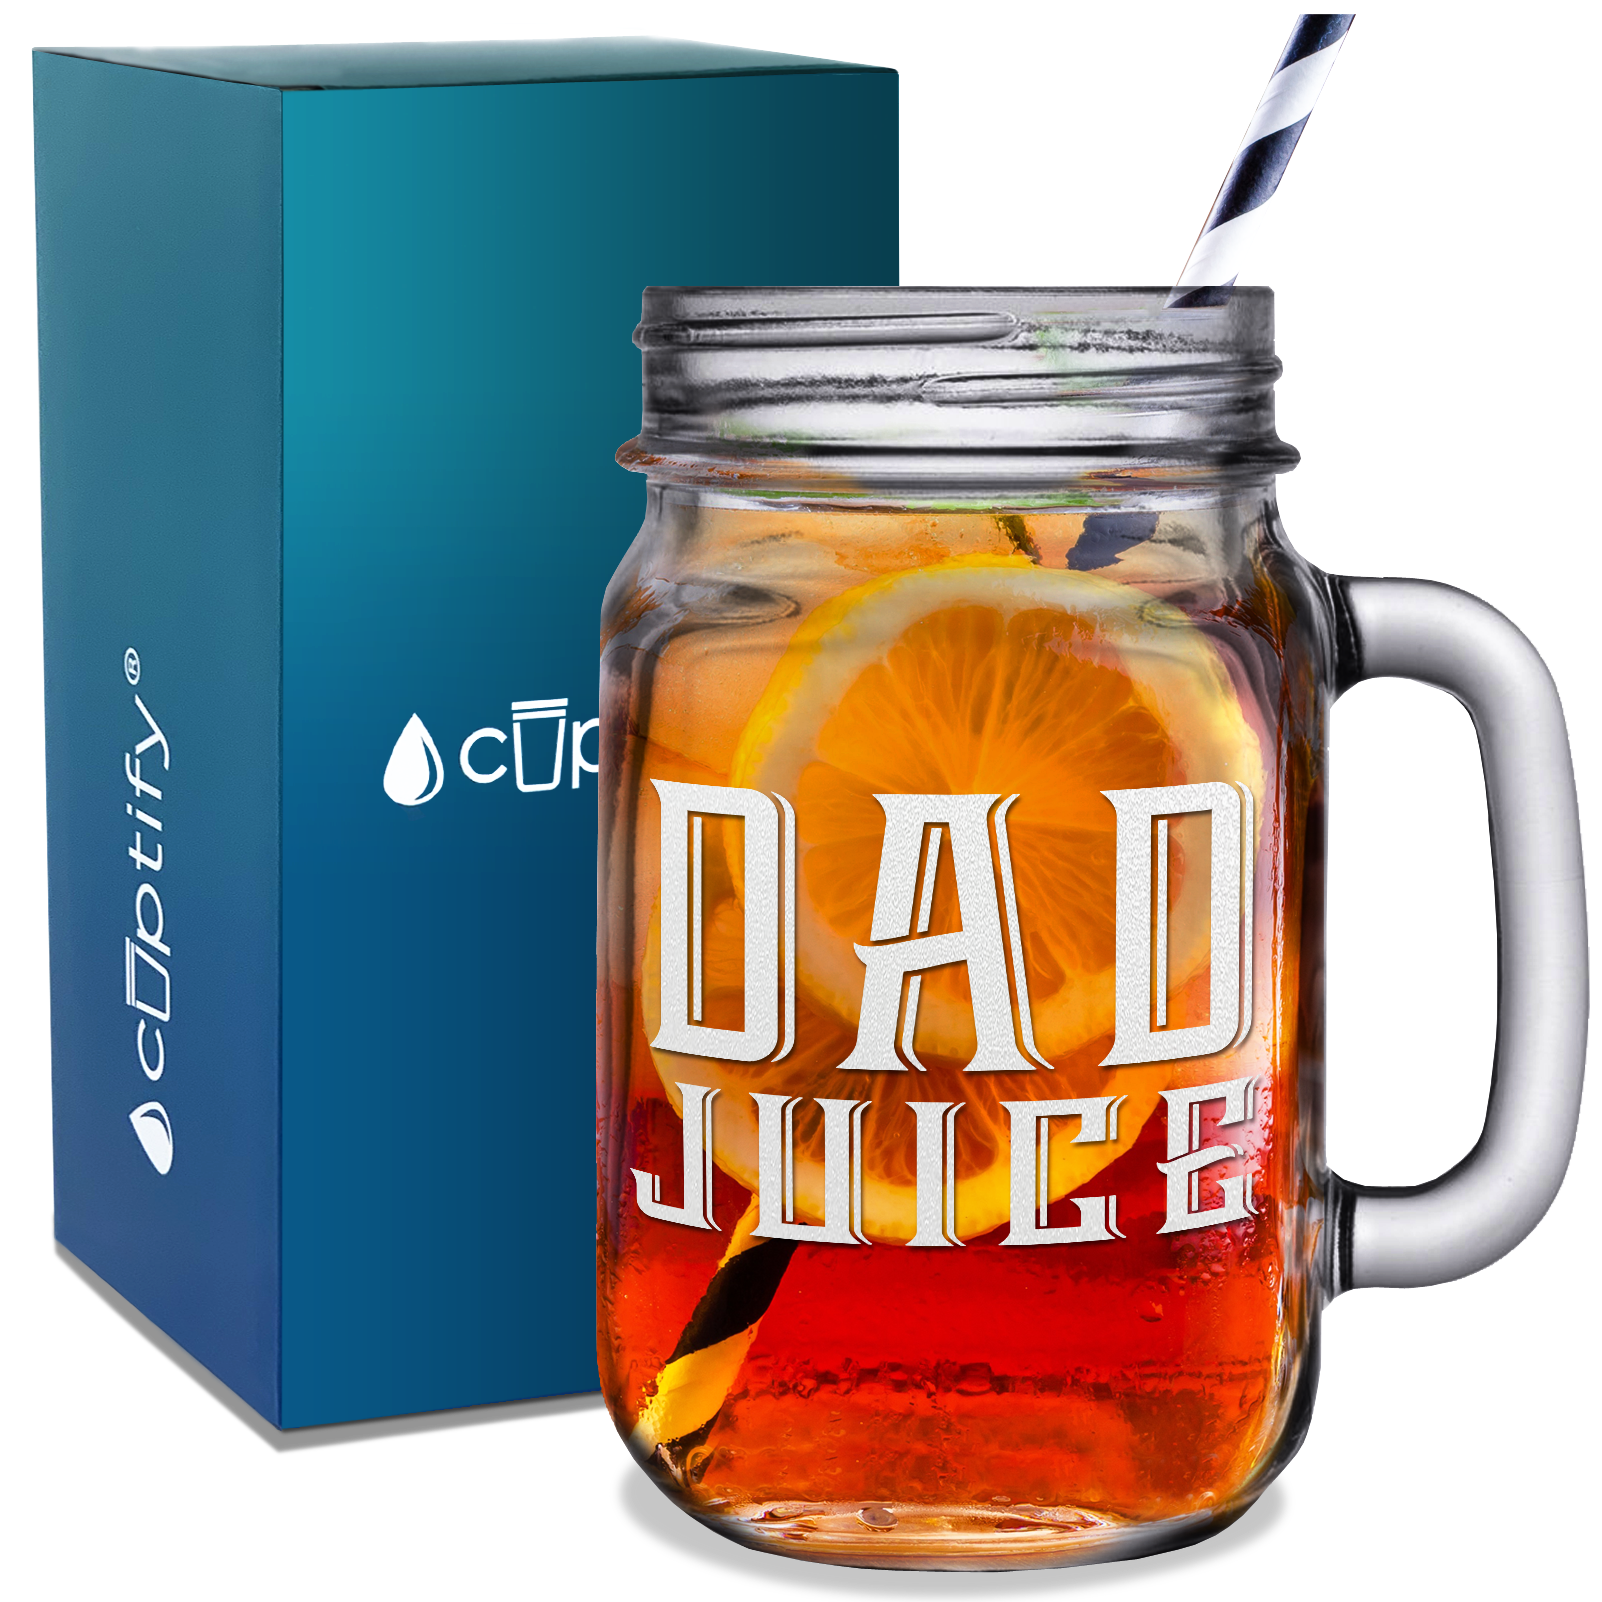 Dad Juice Etched on 16oz Mason Jar Glass